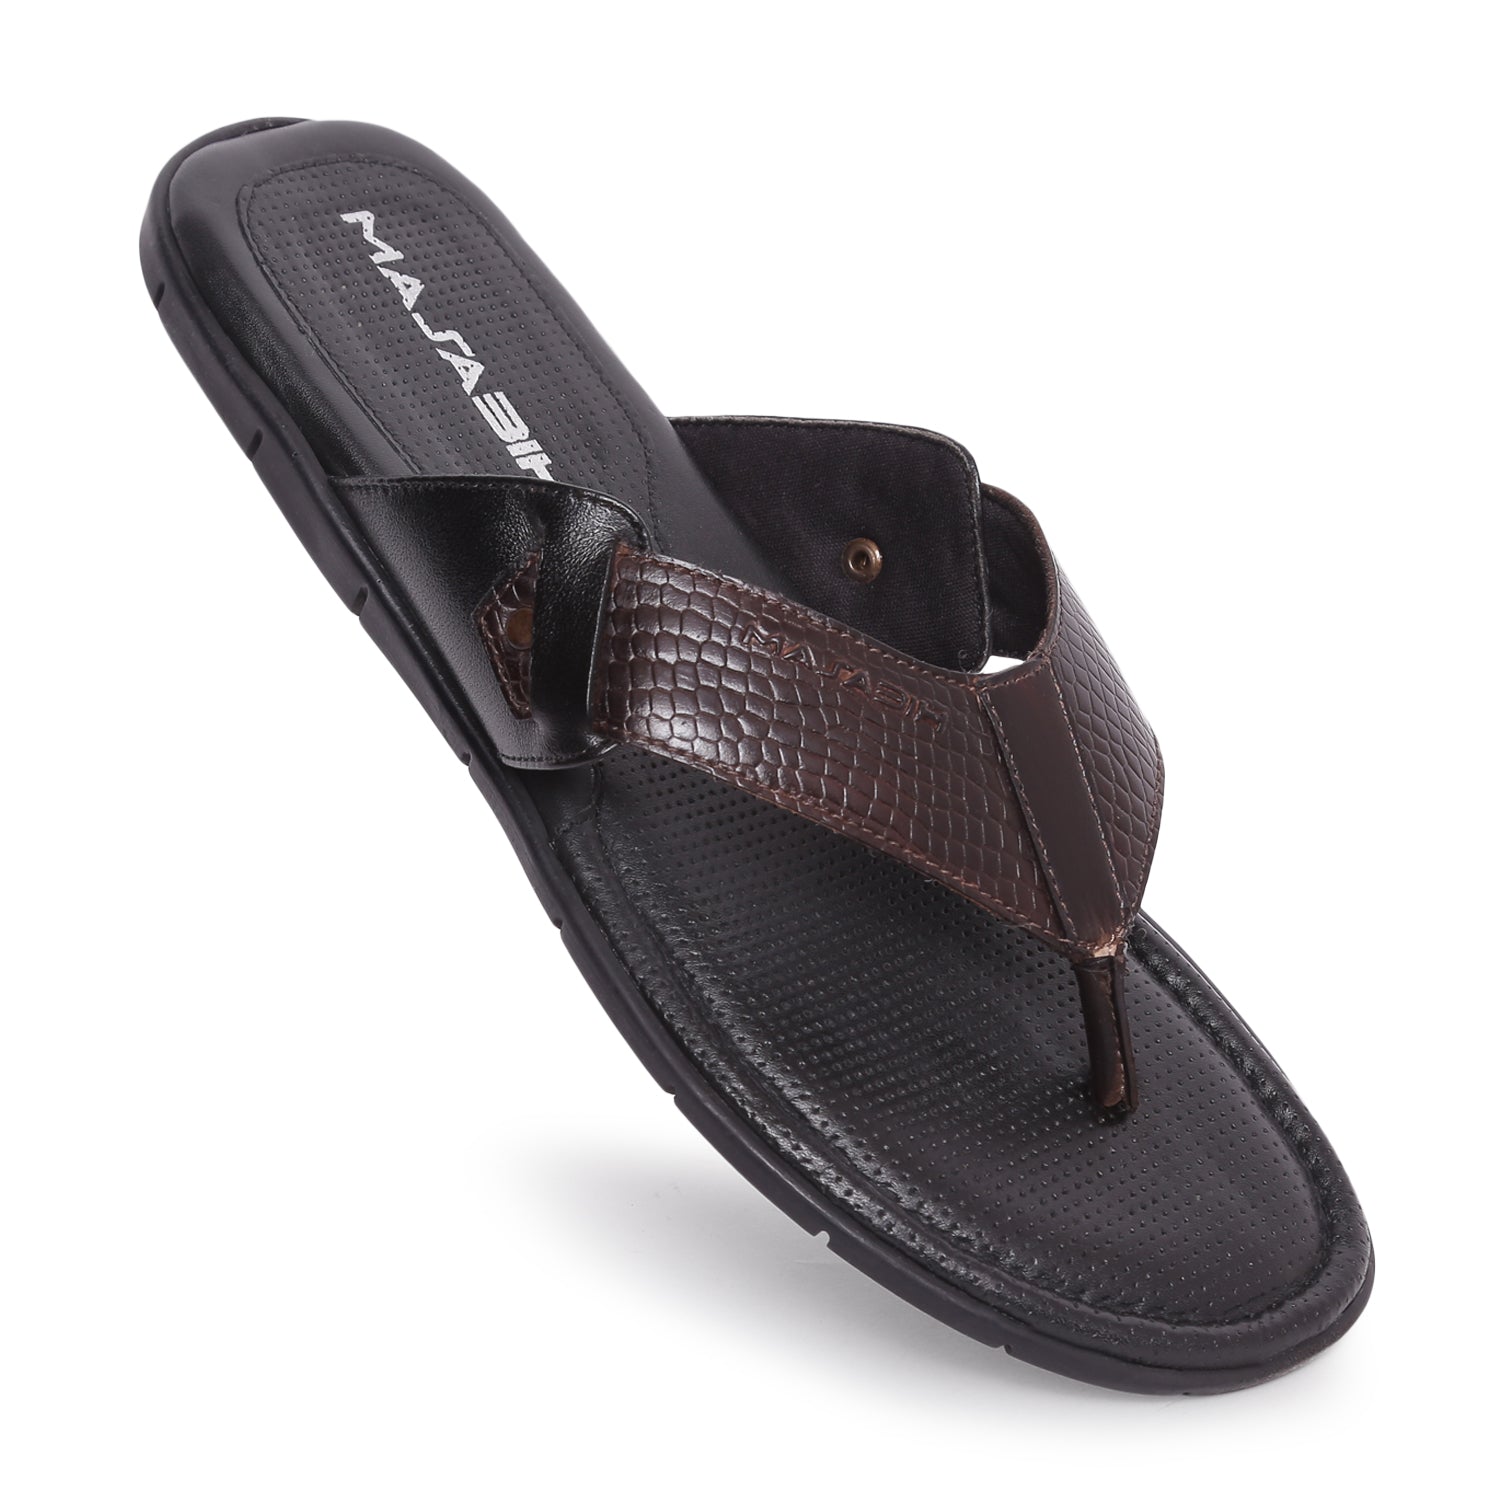 MASABIH Geniune Leather Soft SISSY Print Black / Bordo Color modern tauro thong sandals for Mens